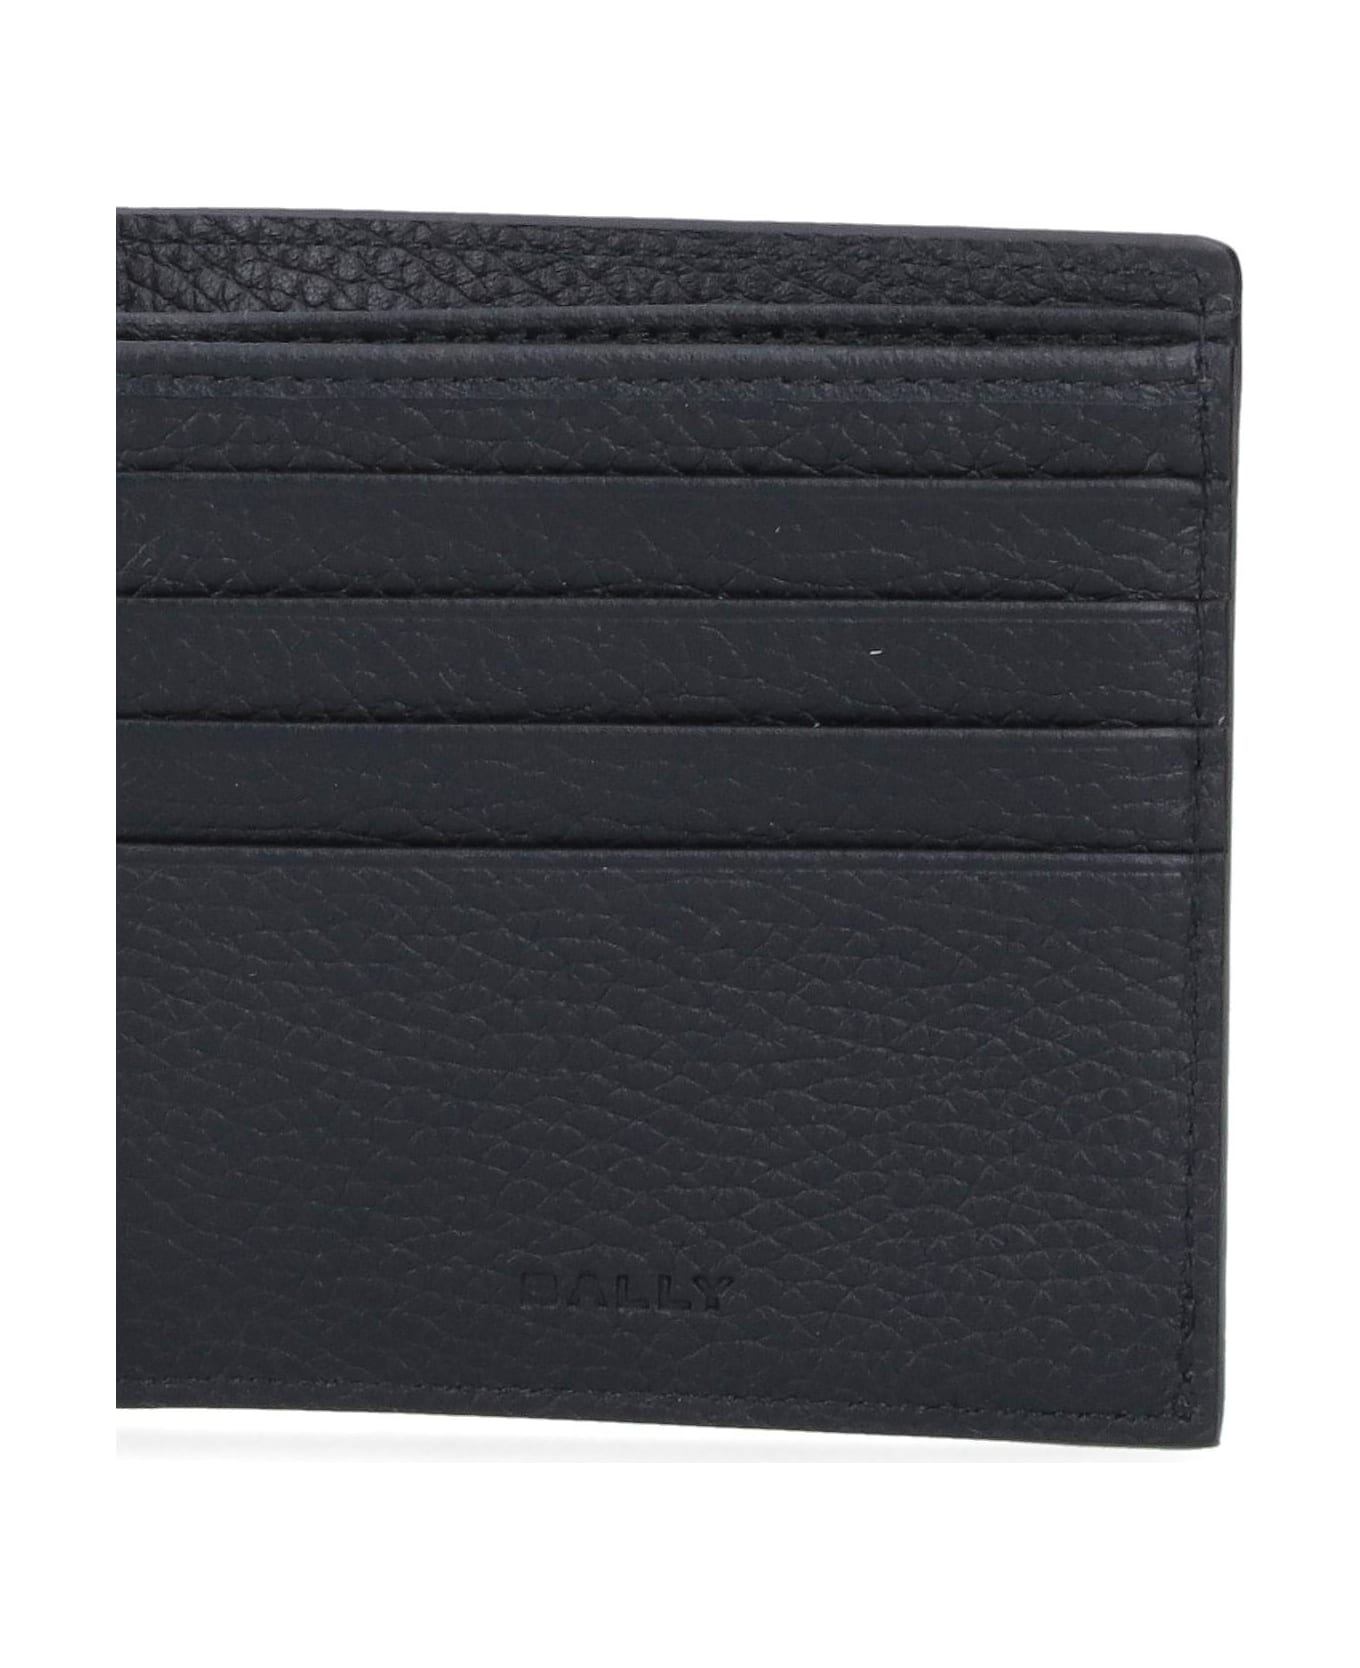 Bally Bi-fold Logo Wallet - Black/palladio 財布